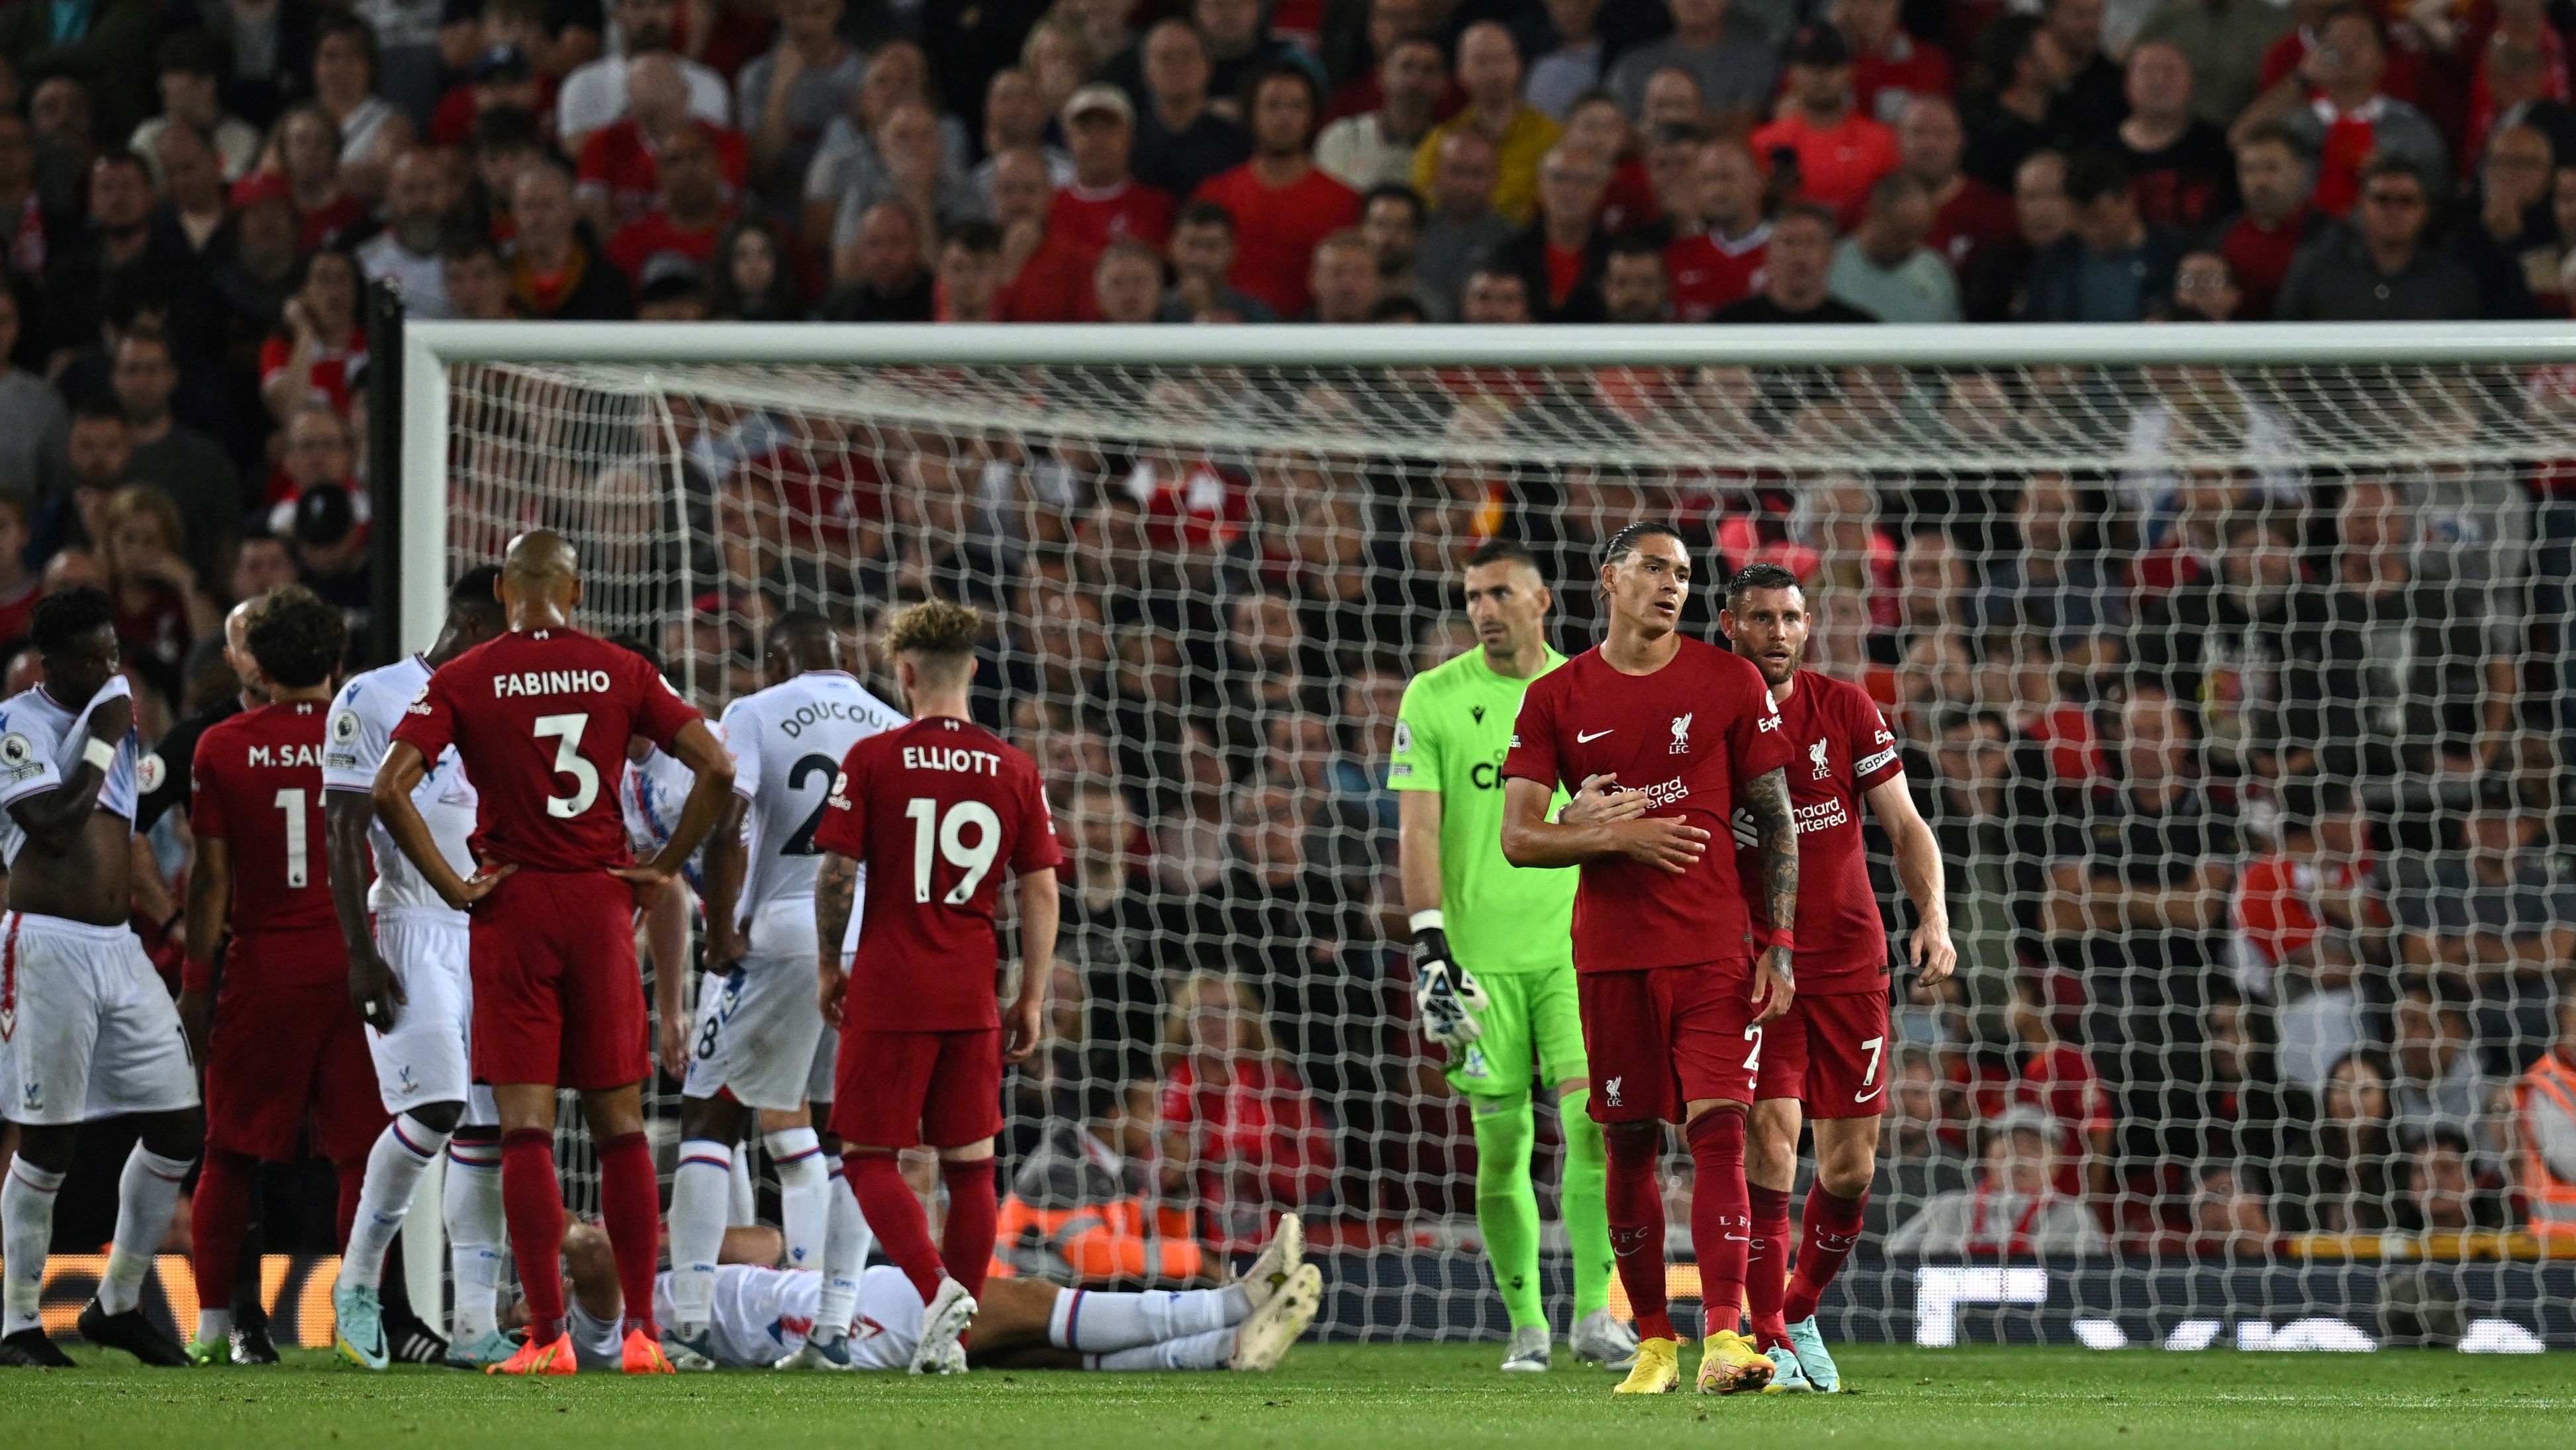 det er smukt Gøre mit bedste sollys Darwin Núñez sent off after headbutt as Liverpool frustrated by Crystal  Palace | CNN